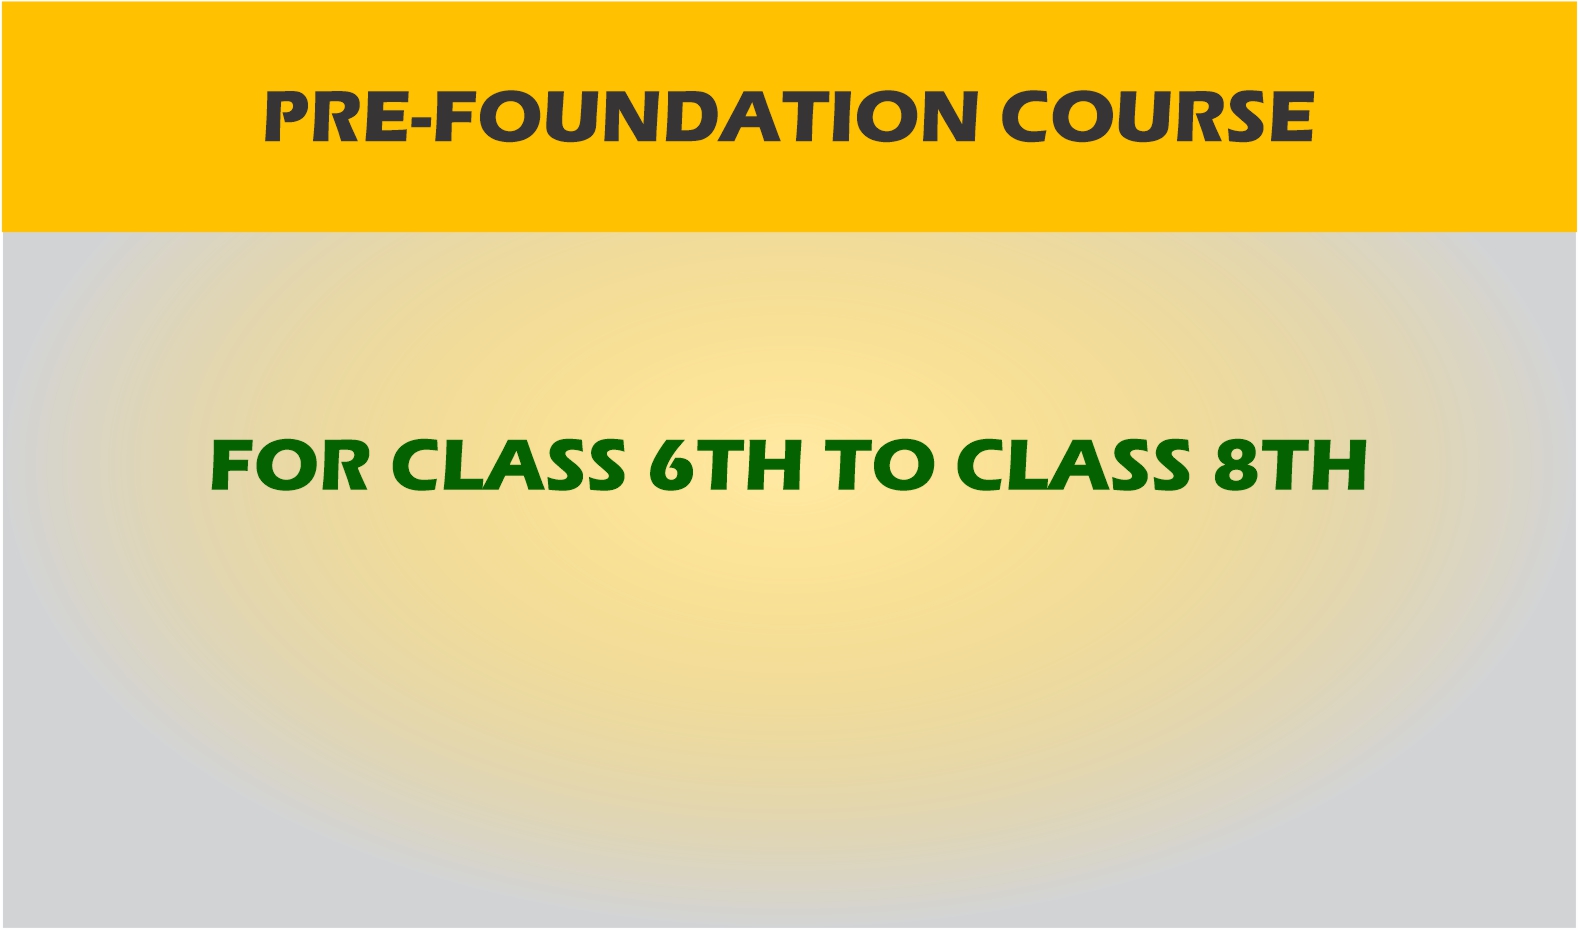 Pre-Foundation Courses